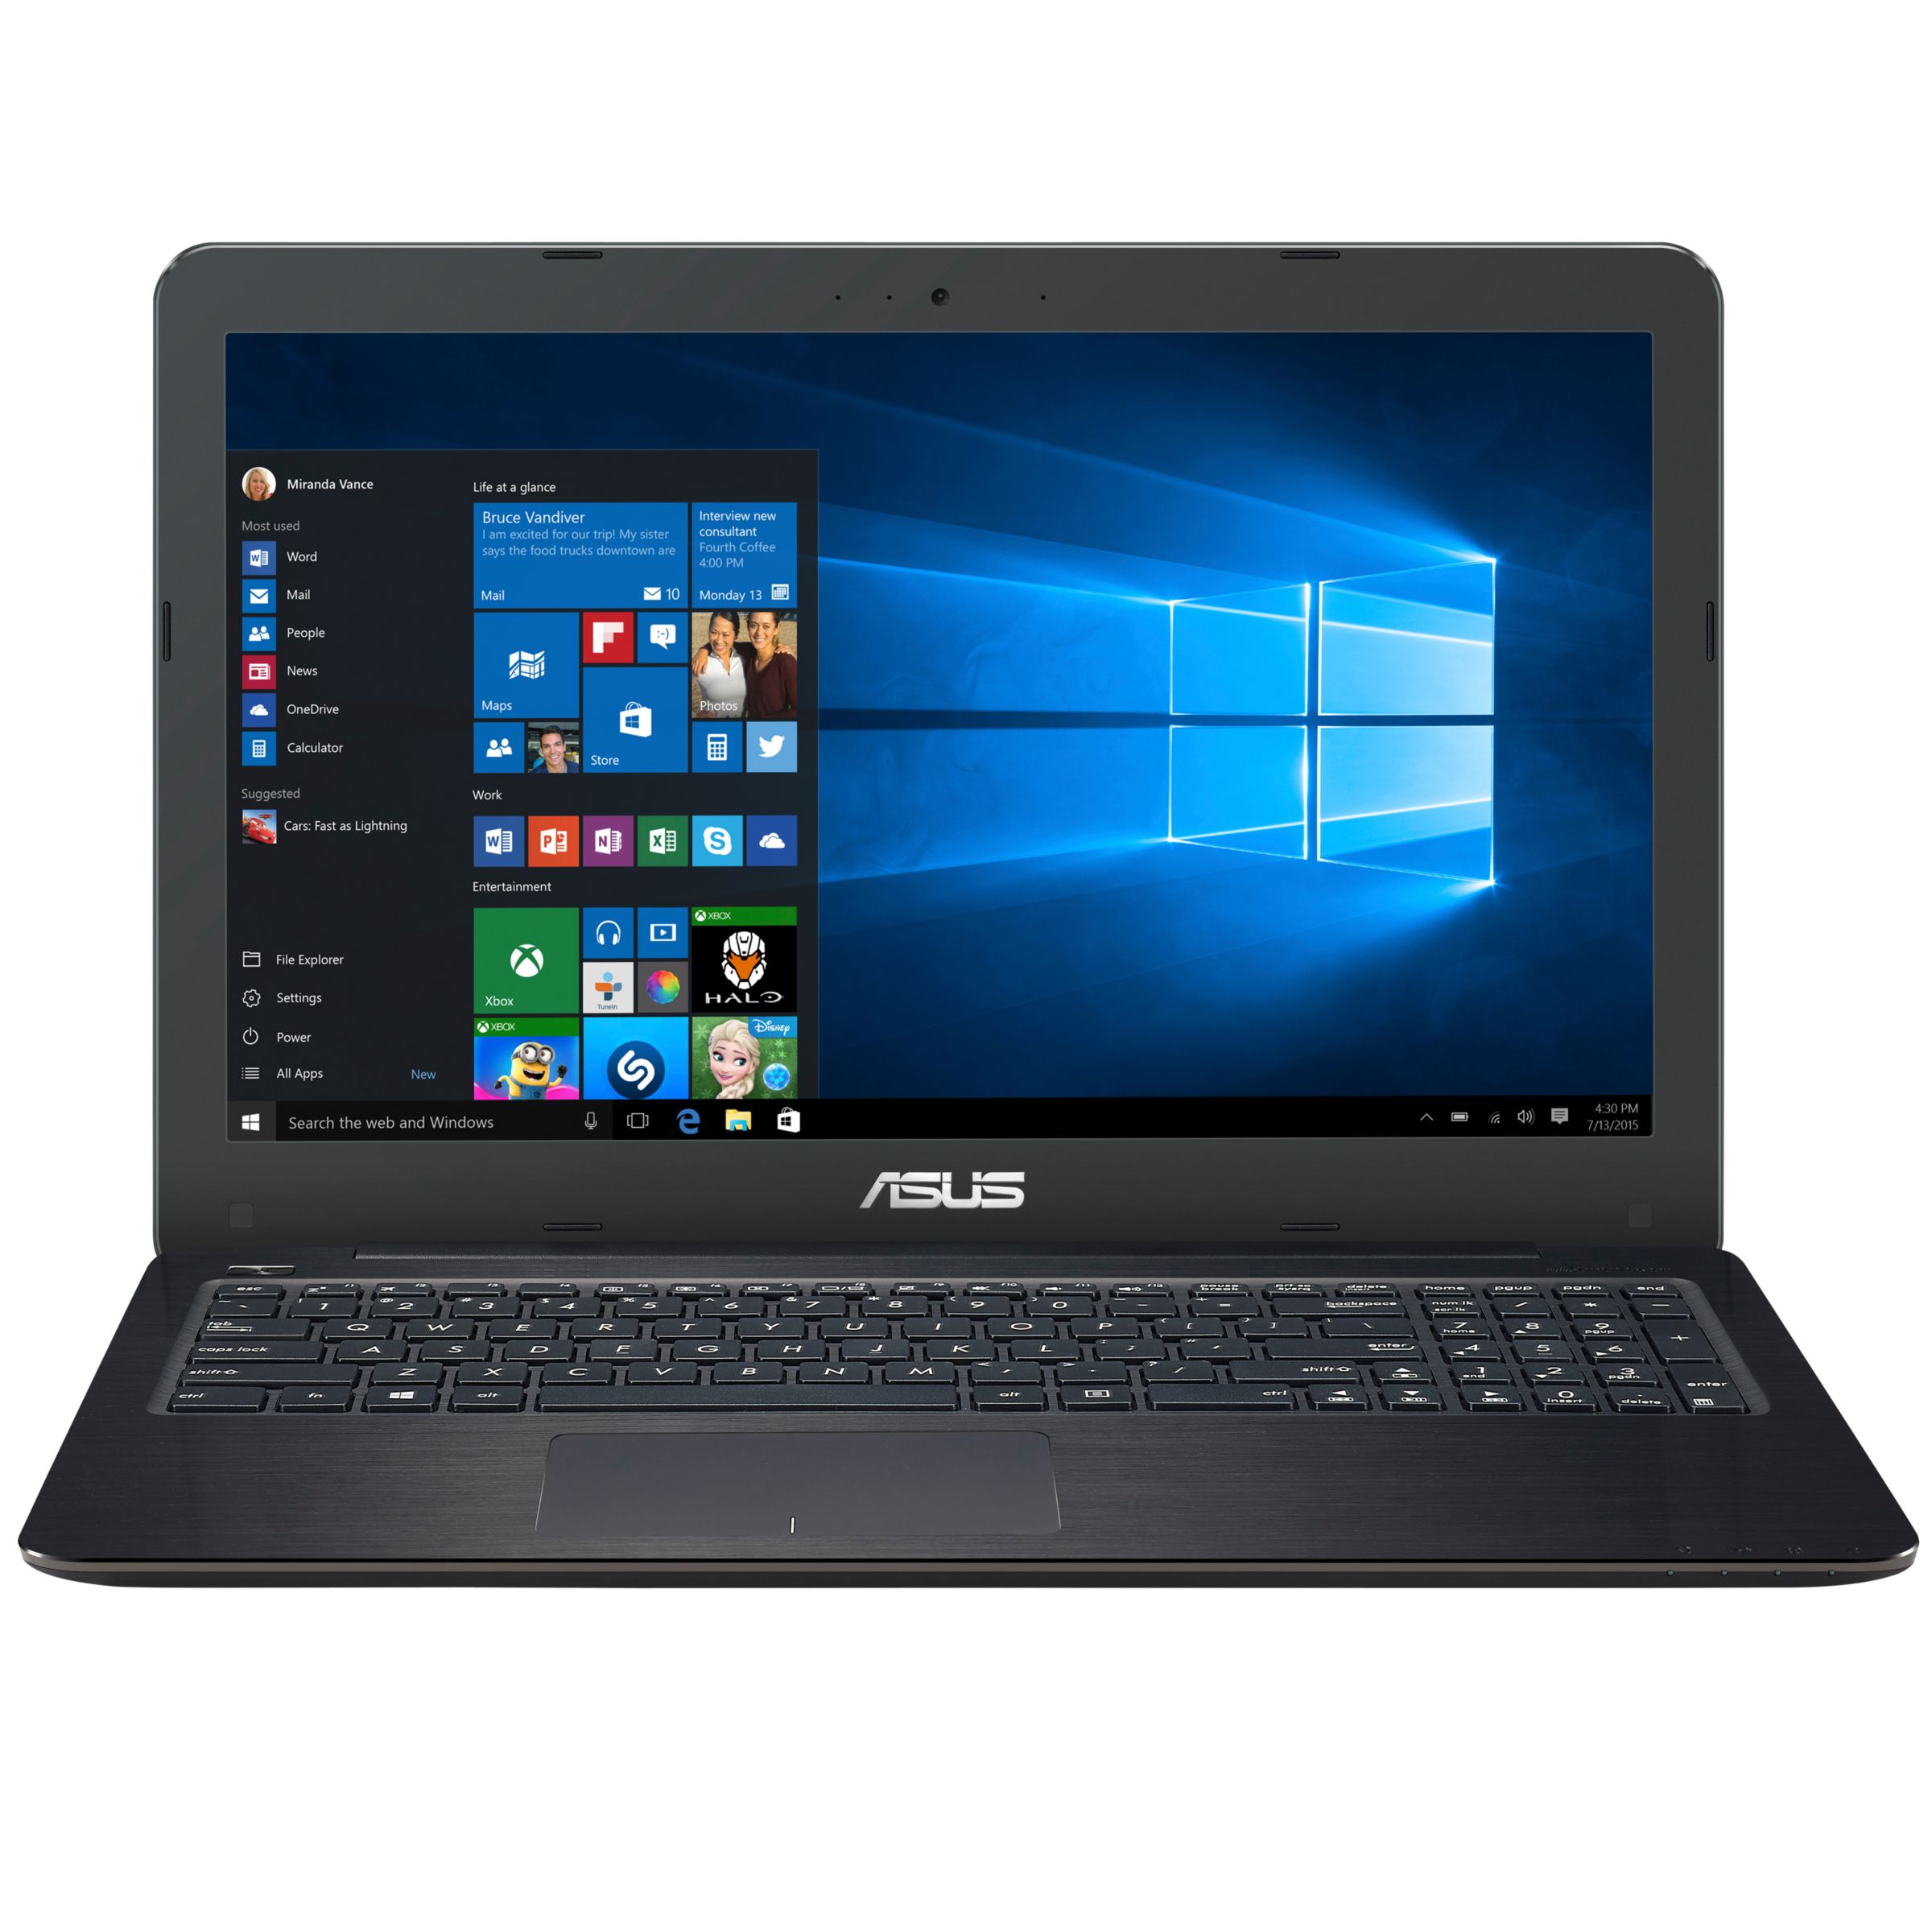 ASUS X556UA Laptop, Intel Core i7, 8GB RAM, 1TB, 15.6